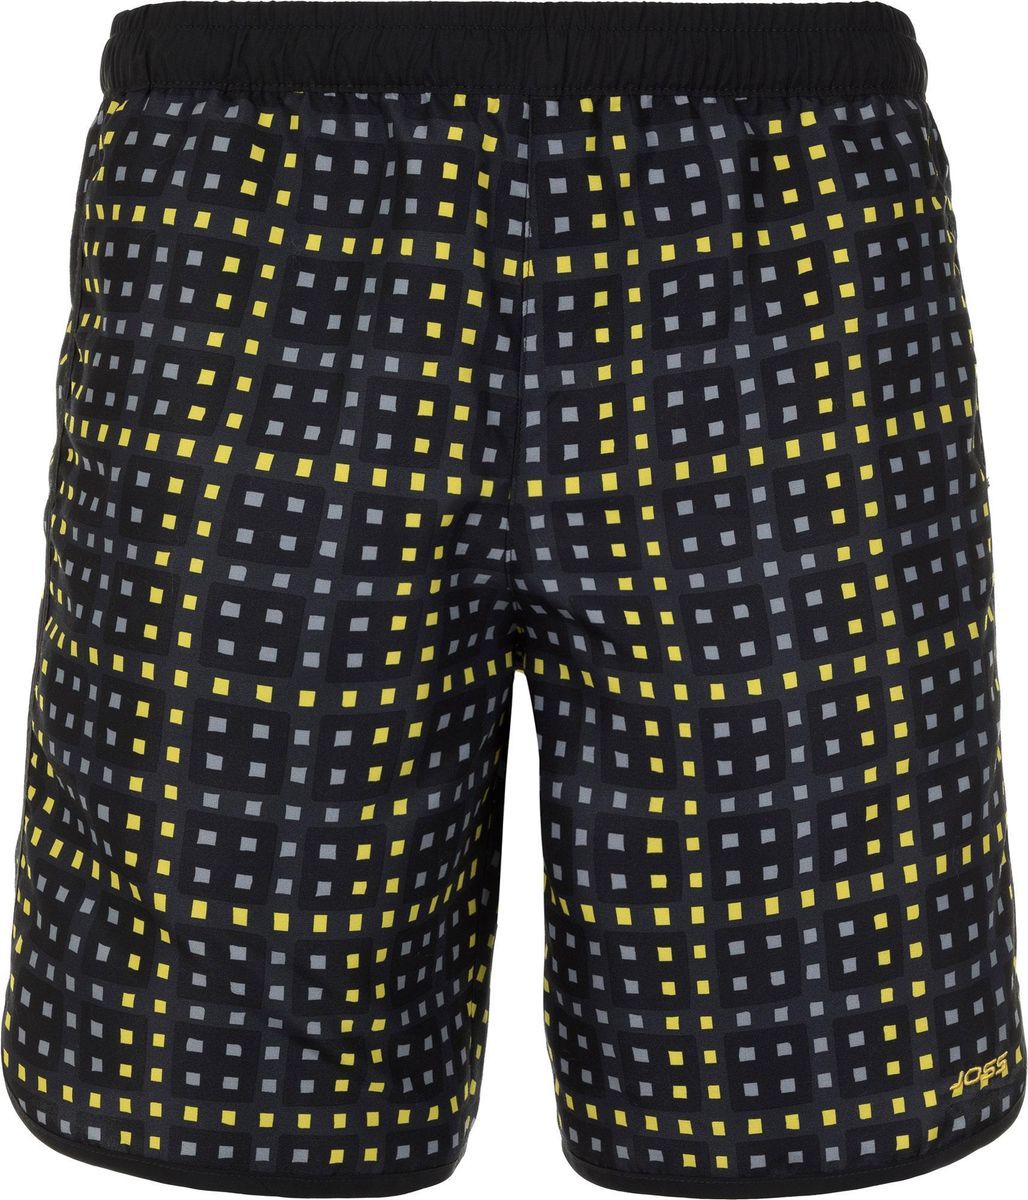     Joss Men's shorts, : , . S17AJSSHM02-AO.  46